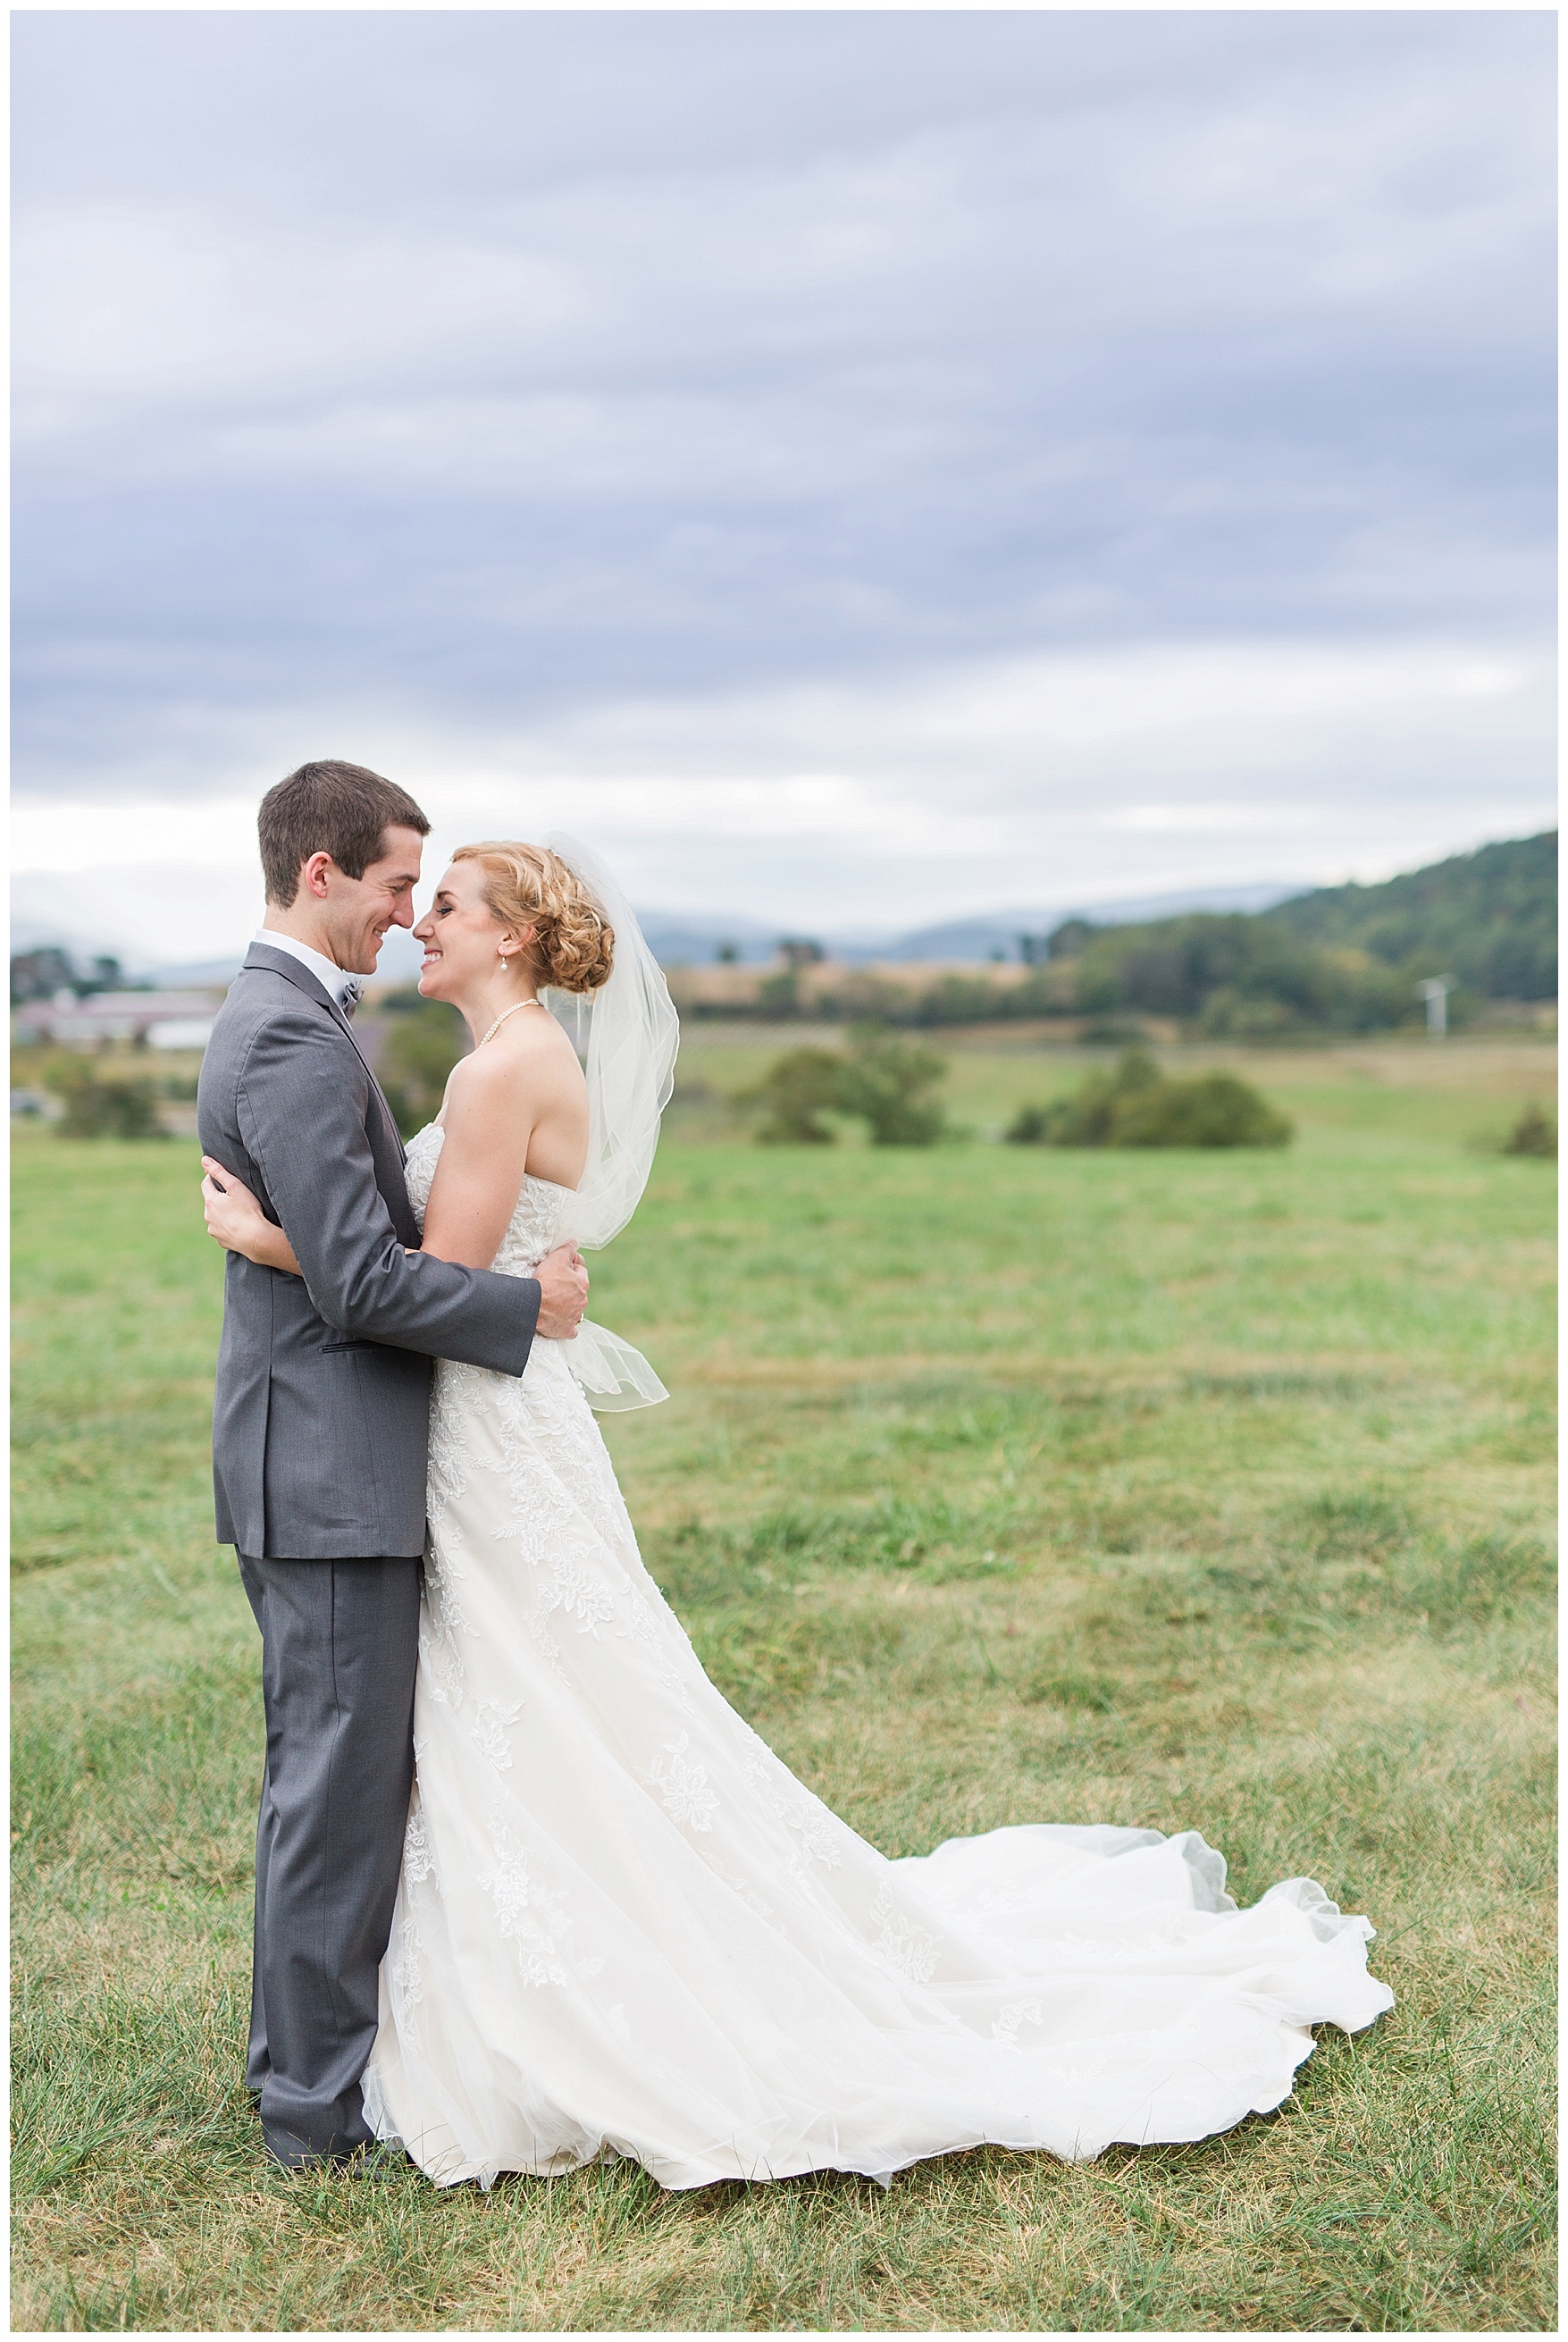 Early Mountain Vineyard Wedding || Charlottesville VA Wedding Photographer || www.ashleyeiban.com